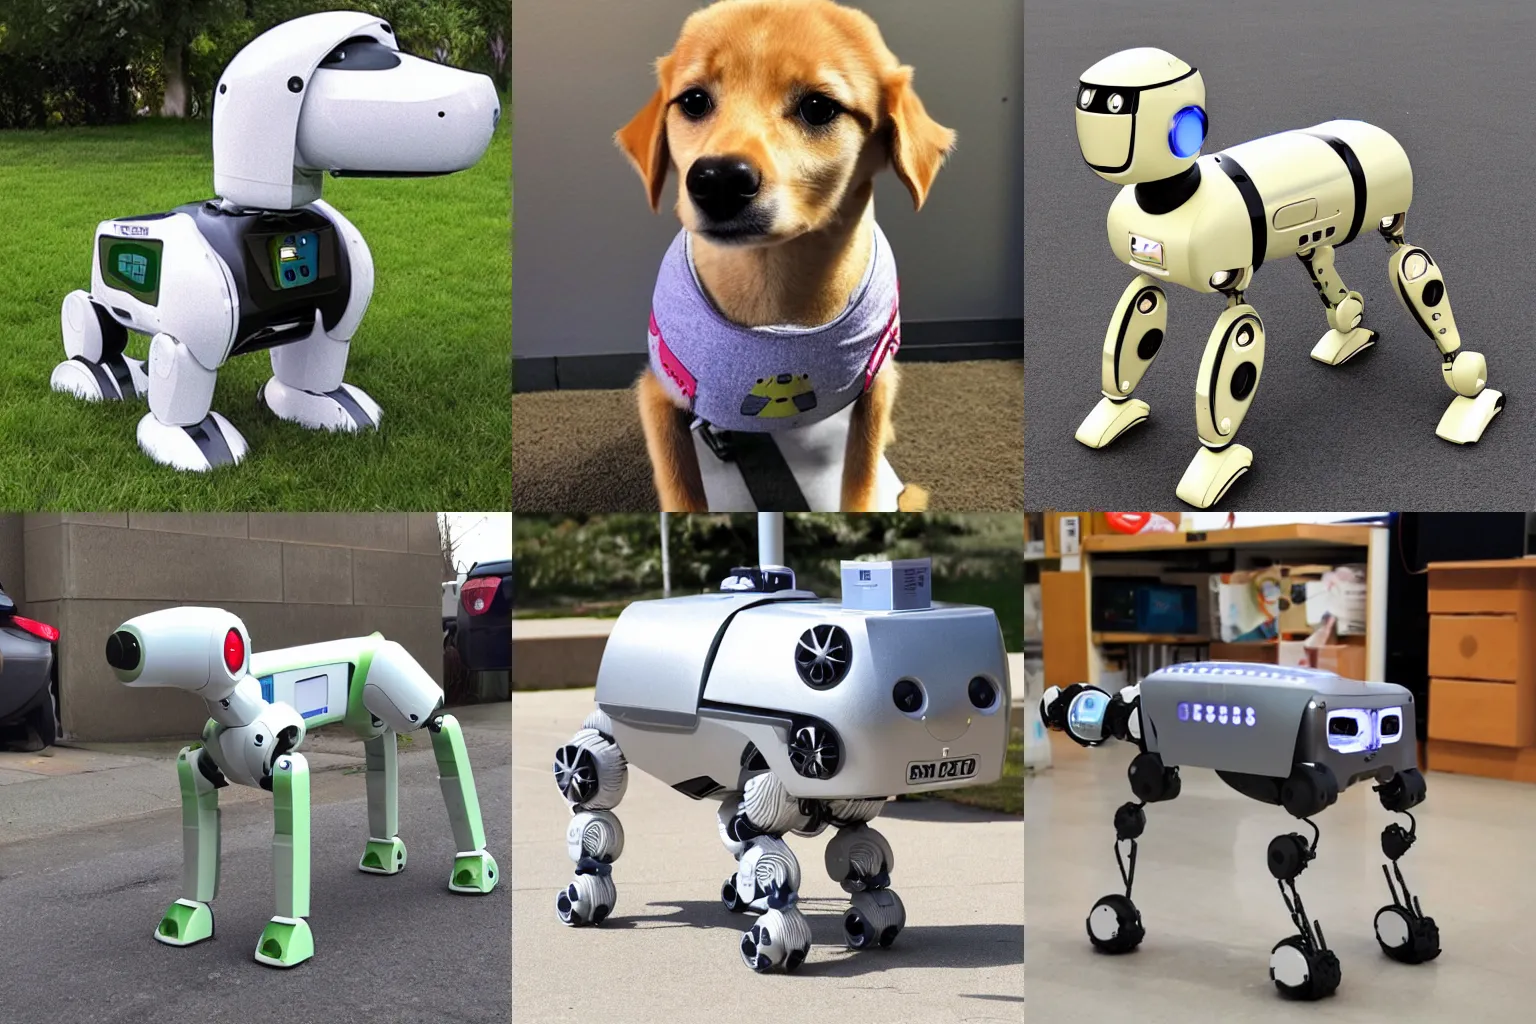 Prompt: A robot dog